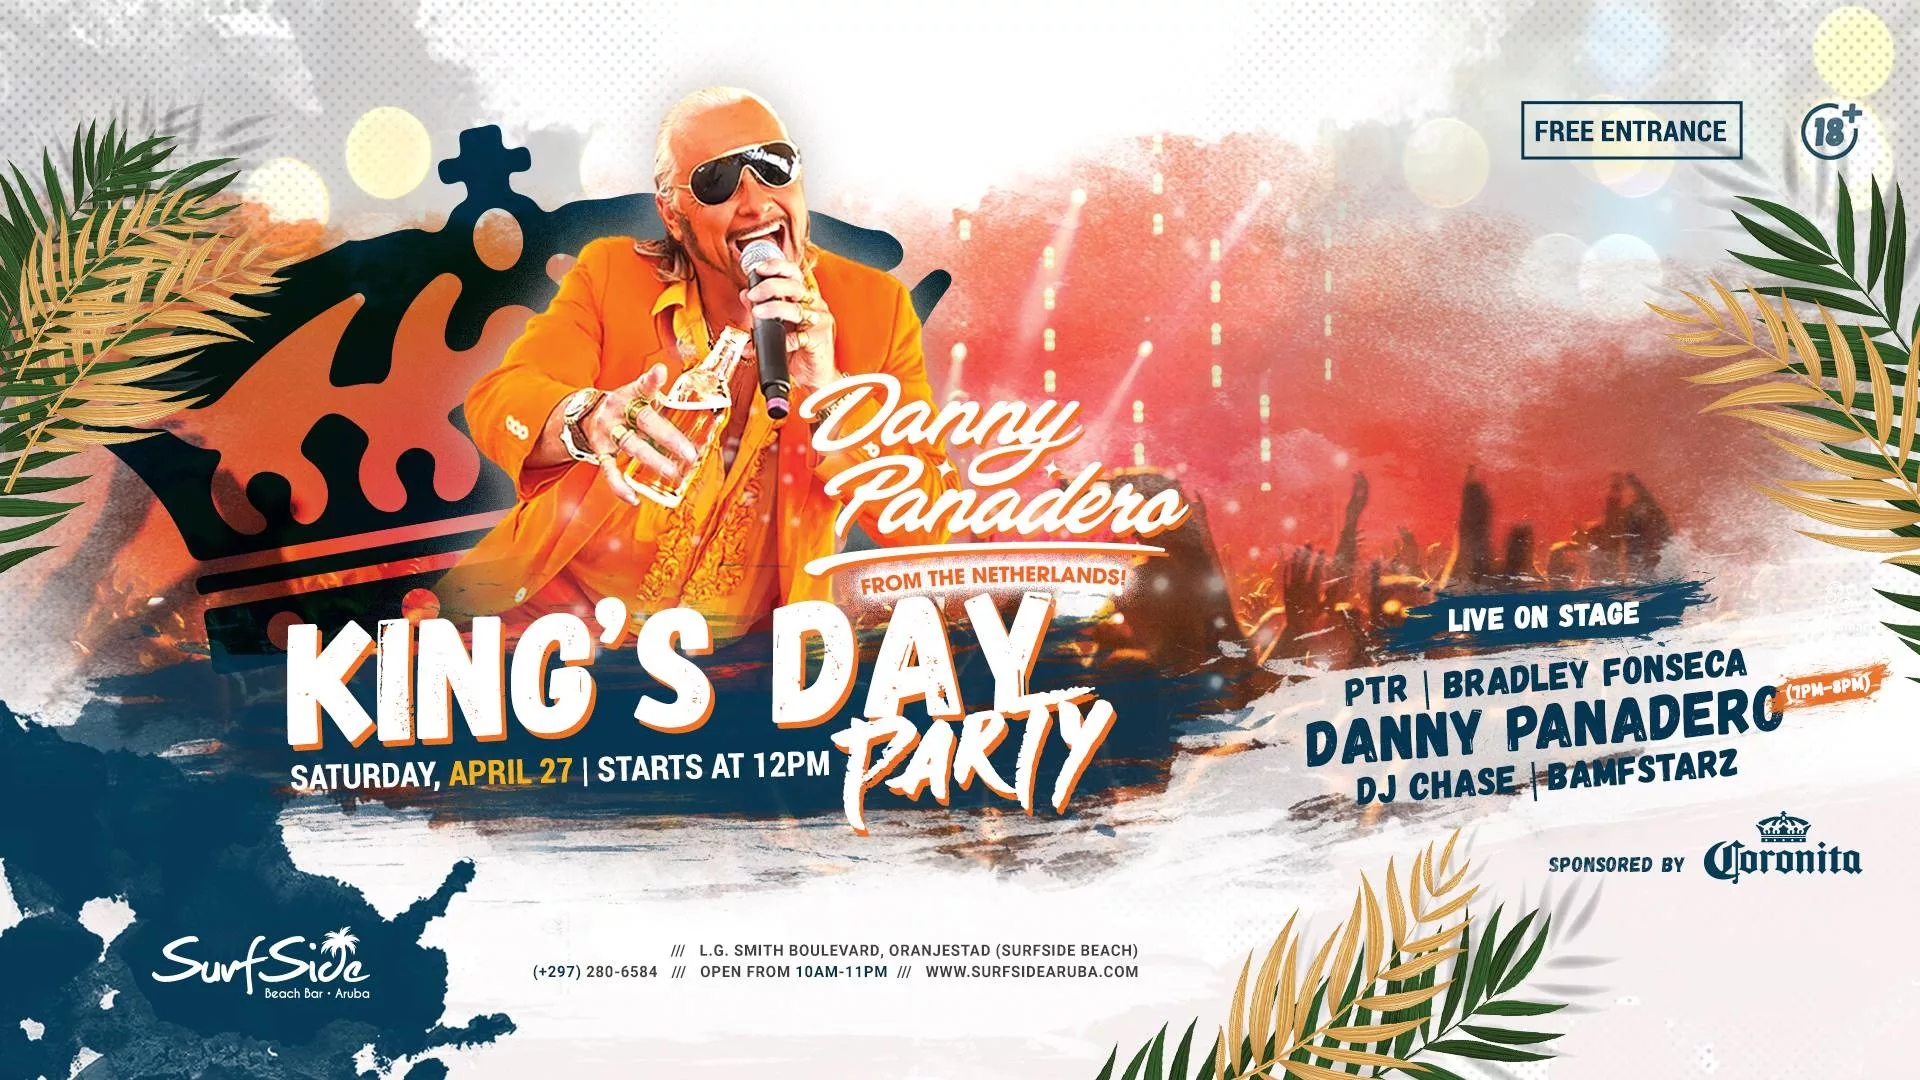 King's Day Beach Party - Danny Panadero - Aruba